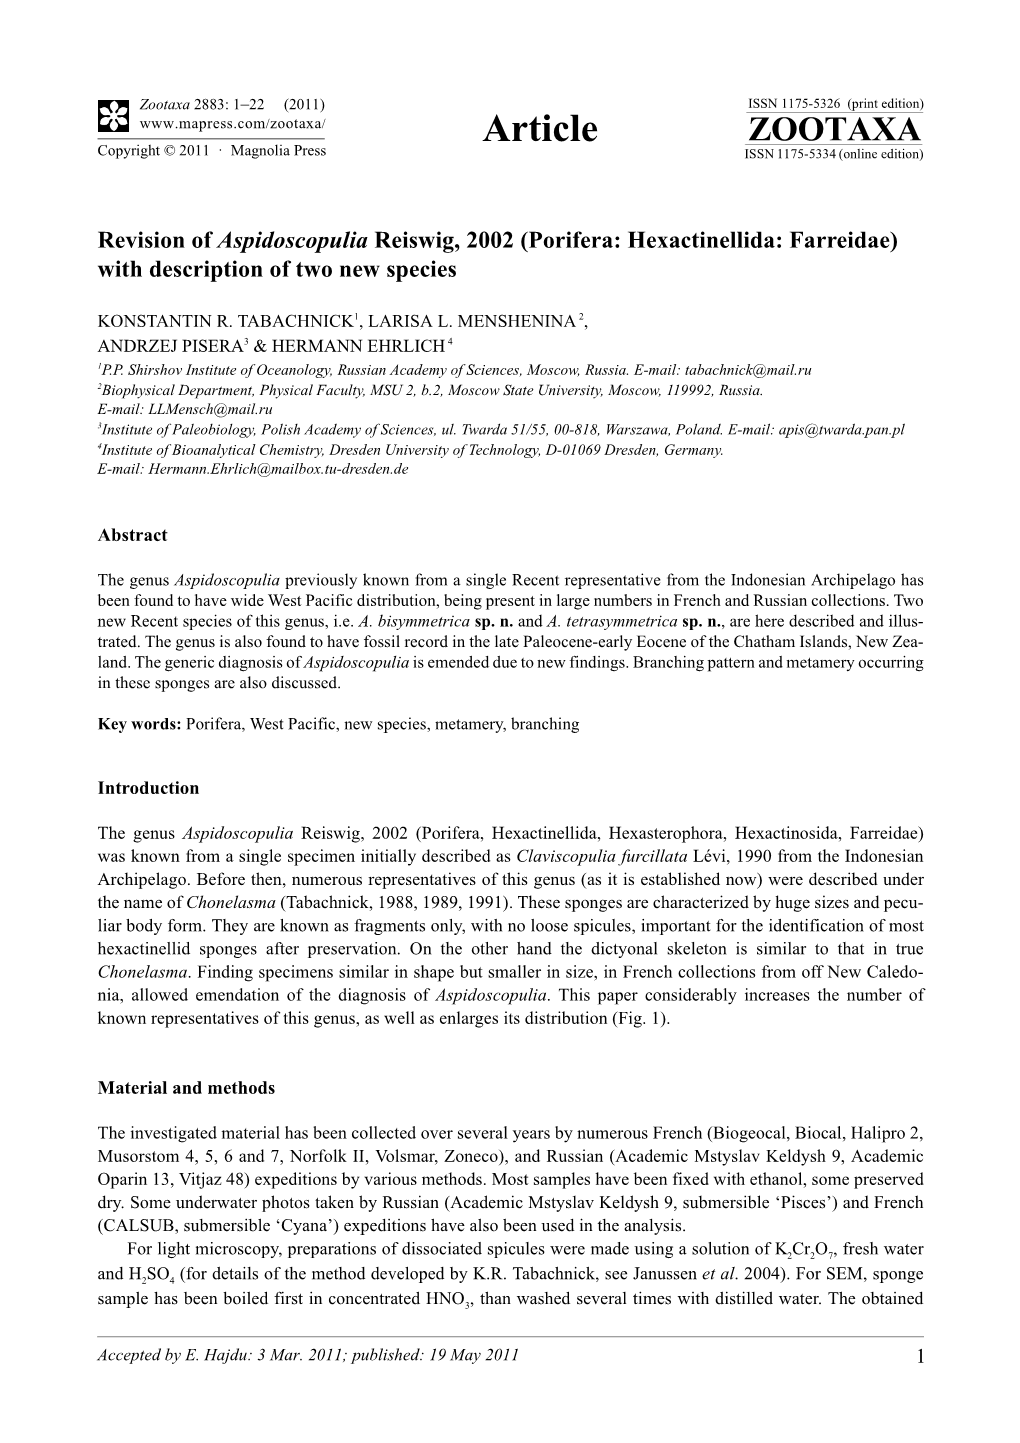 Revision of Aspidoscopulia Reiswig, 2002 (Porifera: Hexactinellida: Farreidae) with Description of Two New Species